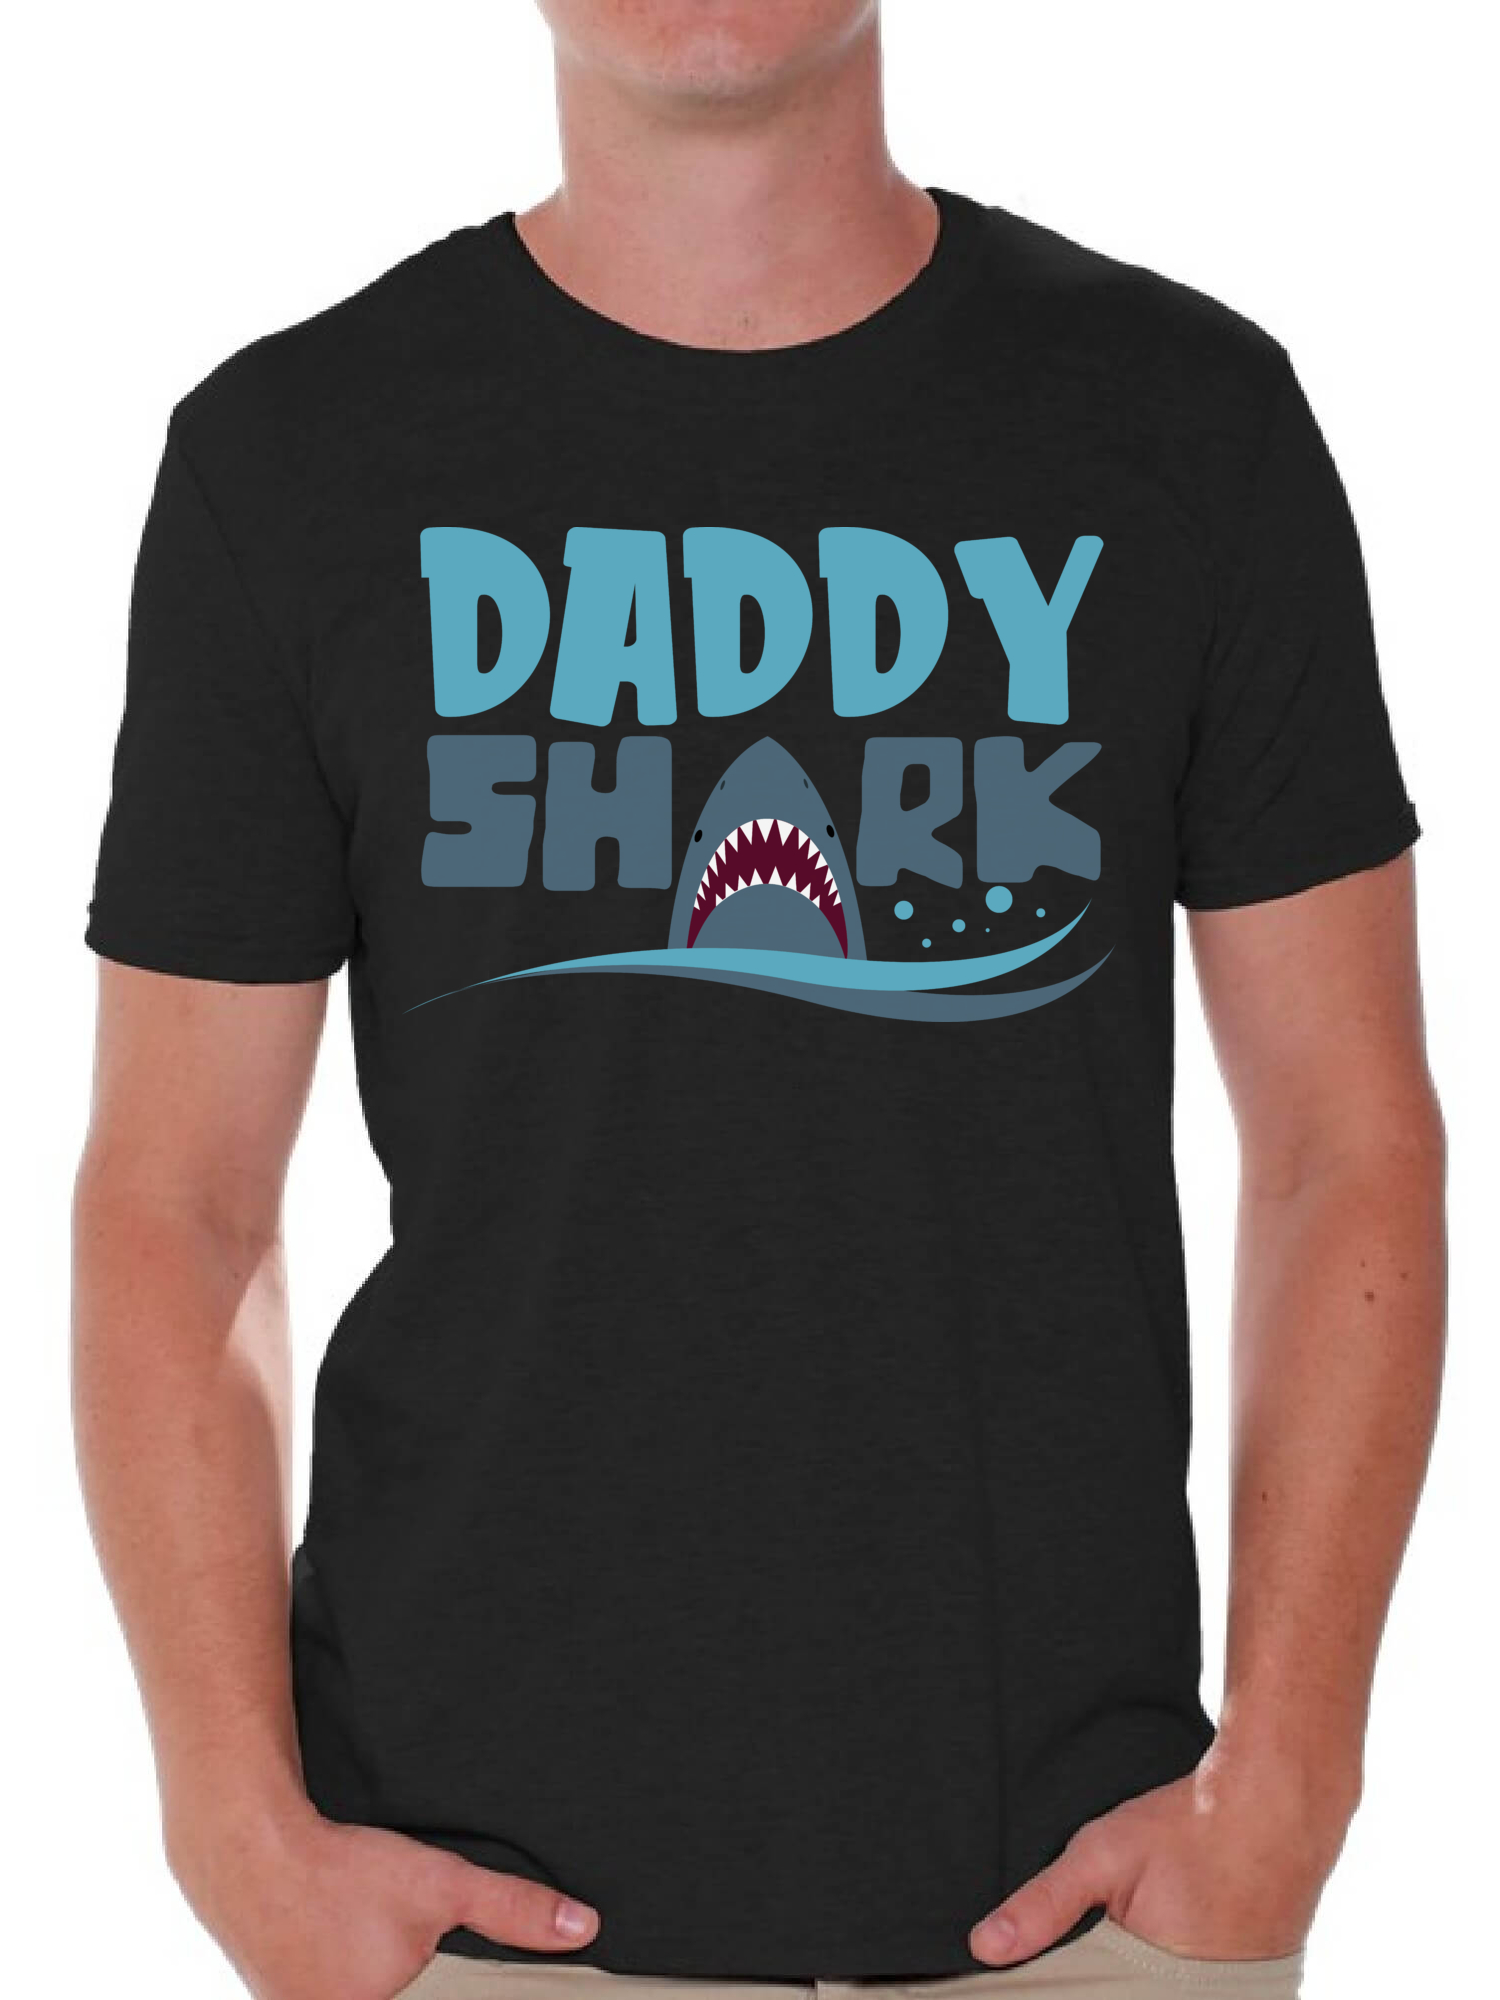 Awkward Styles Daddy Shark Tshirt for Men Shark Family T Shirt Family Vacation Shirts Matching Shark Shirts for Family Shark Gifts for Dad Shark Themed Party Outfit for Dad Shark Dad T-Shirt - image 1 of 4